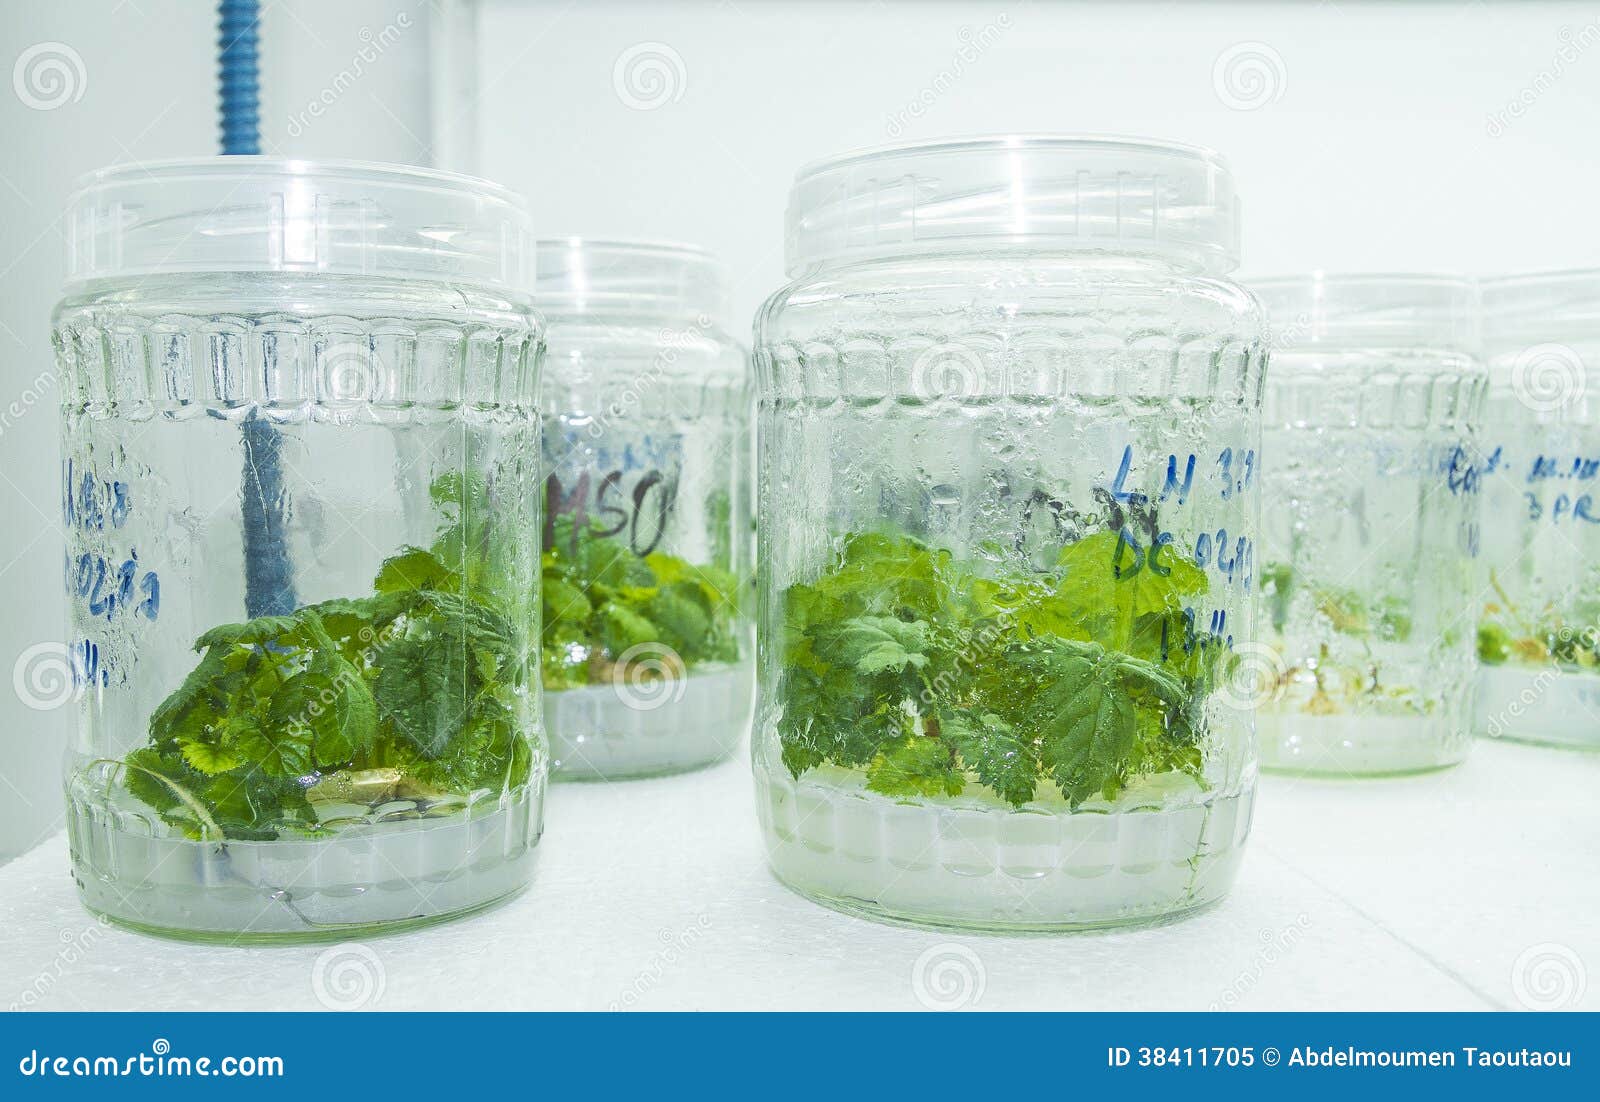 Vitro plant stock Image of food, germinate, biochemistry